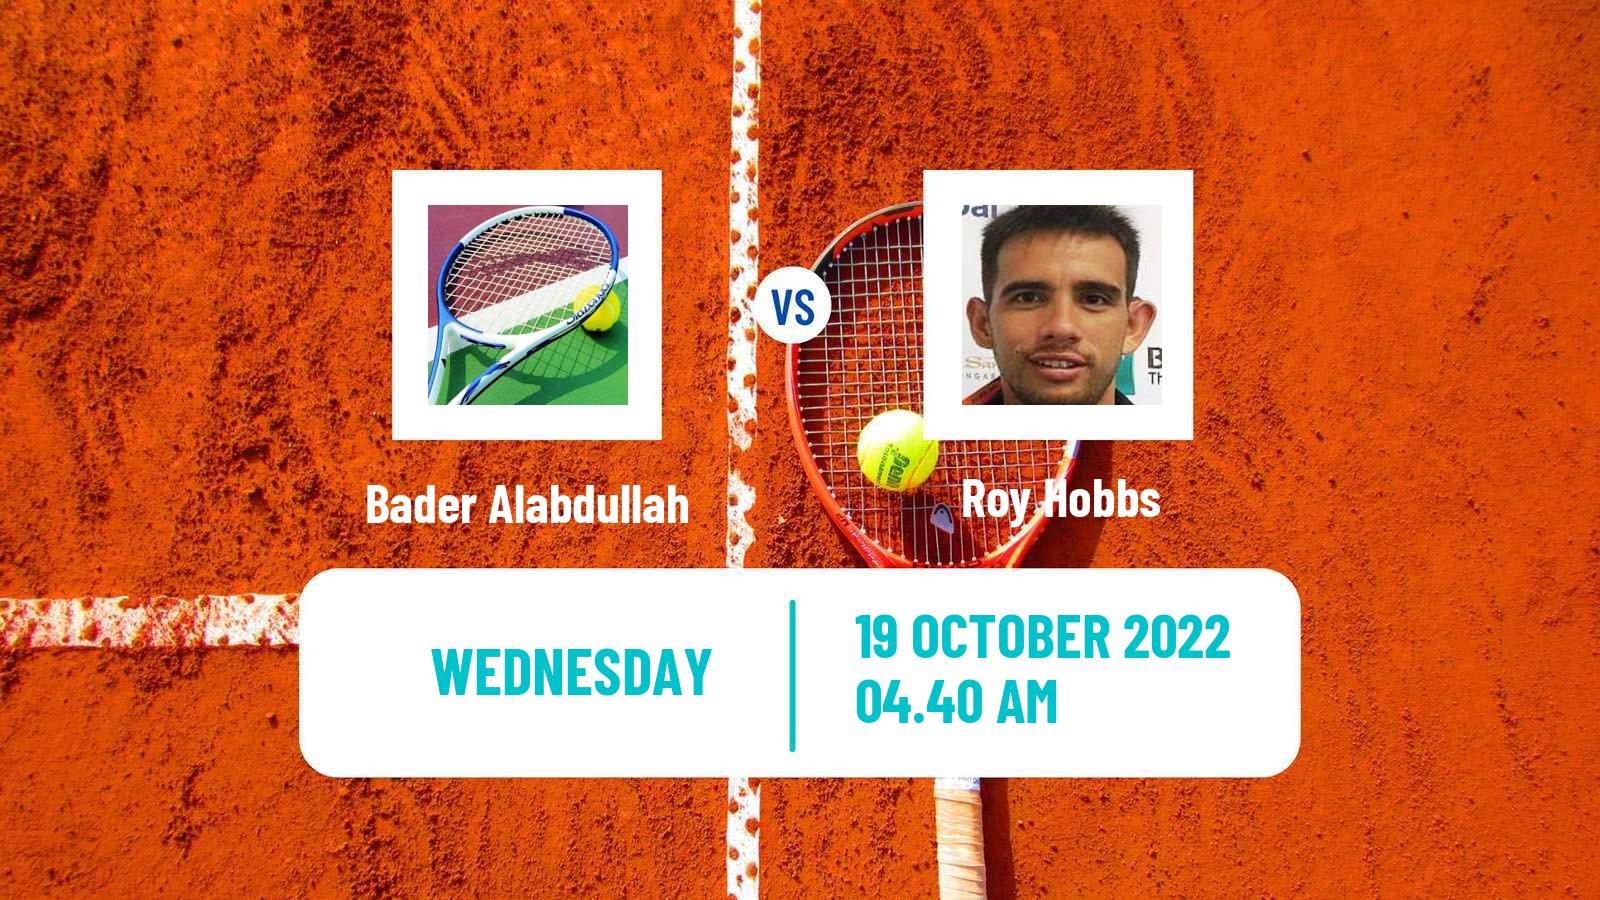 Tennis Davis Cup Group IV Bader Alabdullah - Roy Hobbs